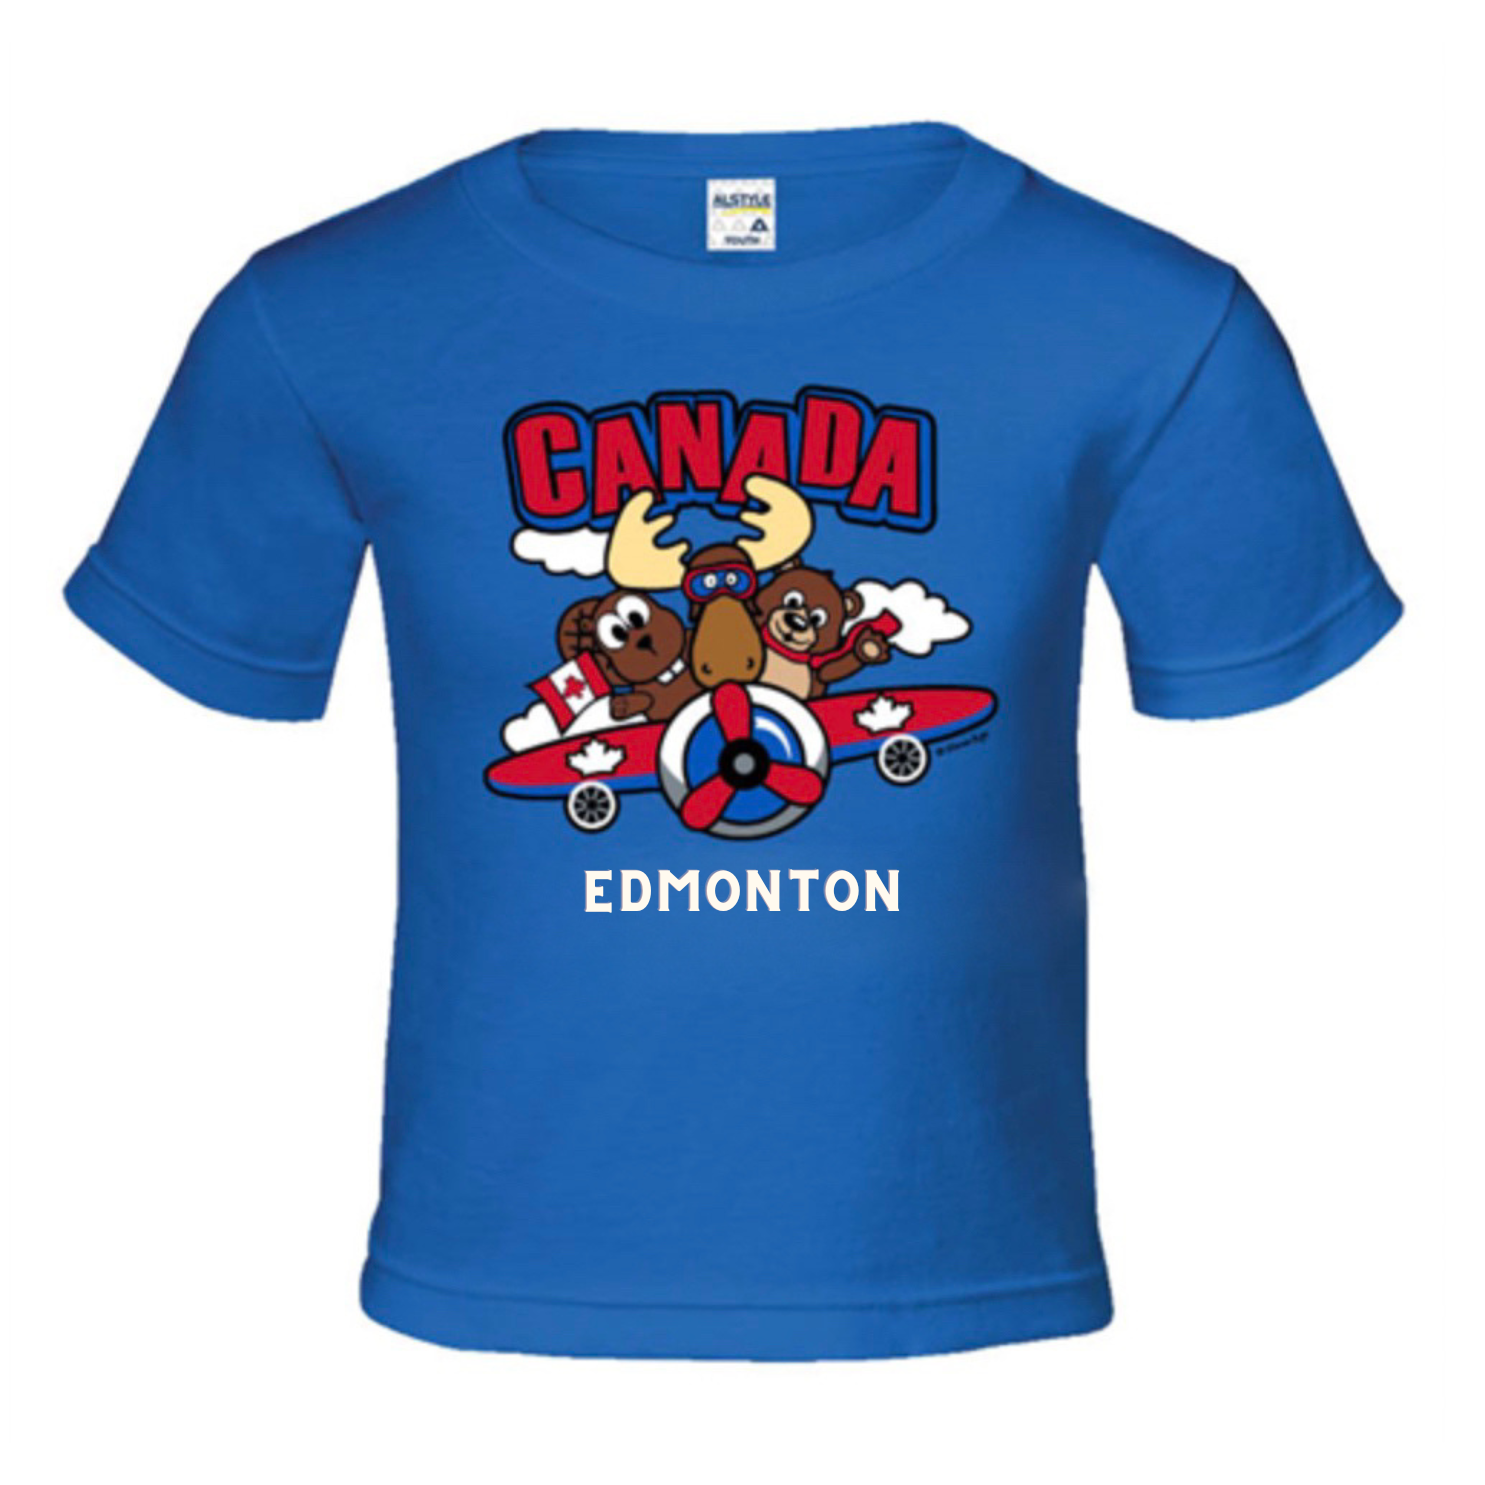 Edmonton T-shirt Kids Royal Blue - Canada Pilots